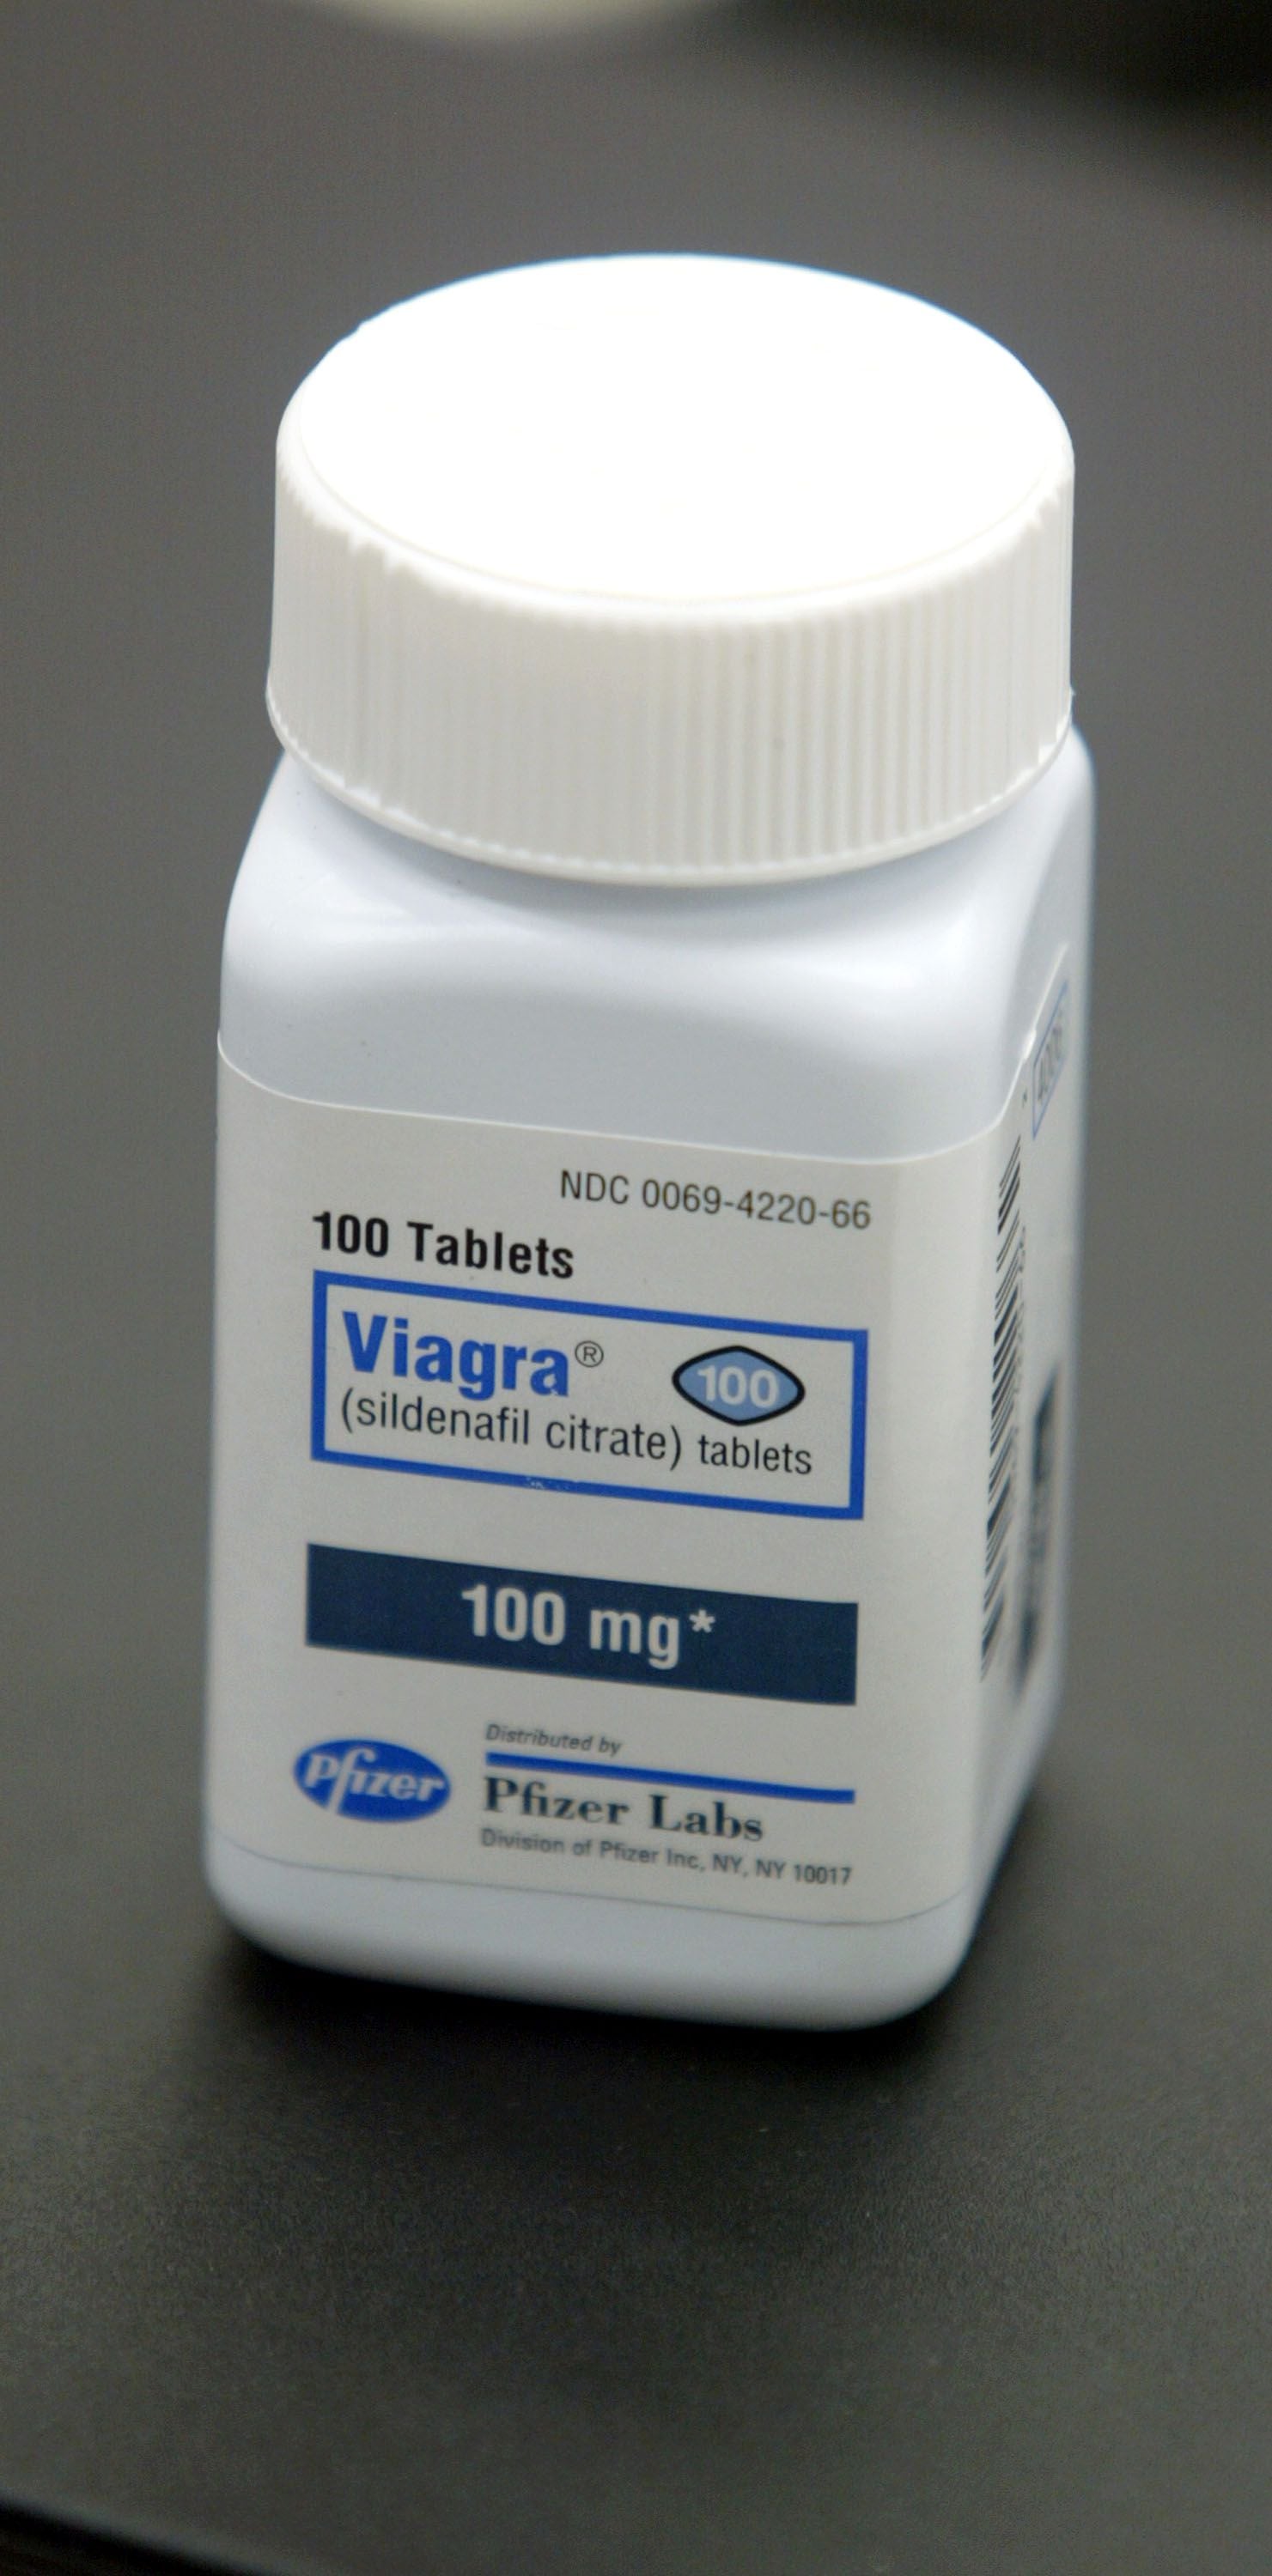 DoD spends $84M a year on Viagra, similar meds